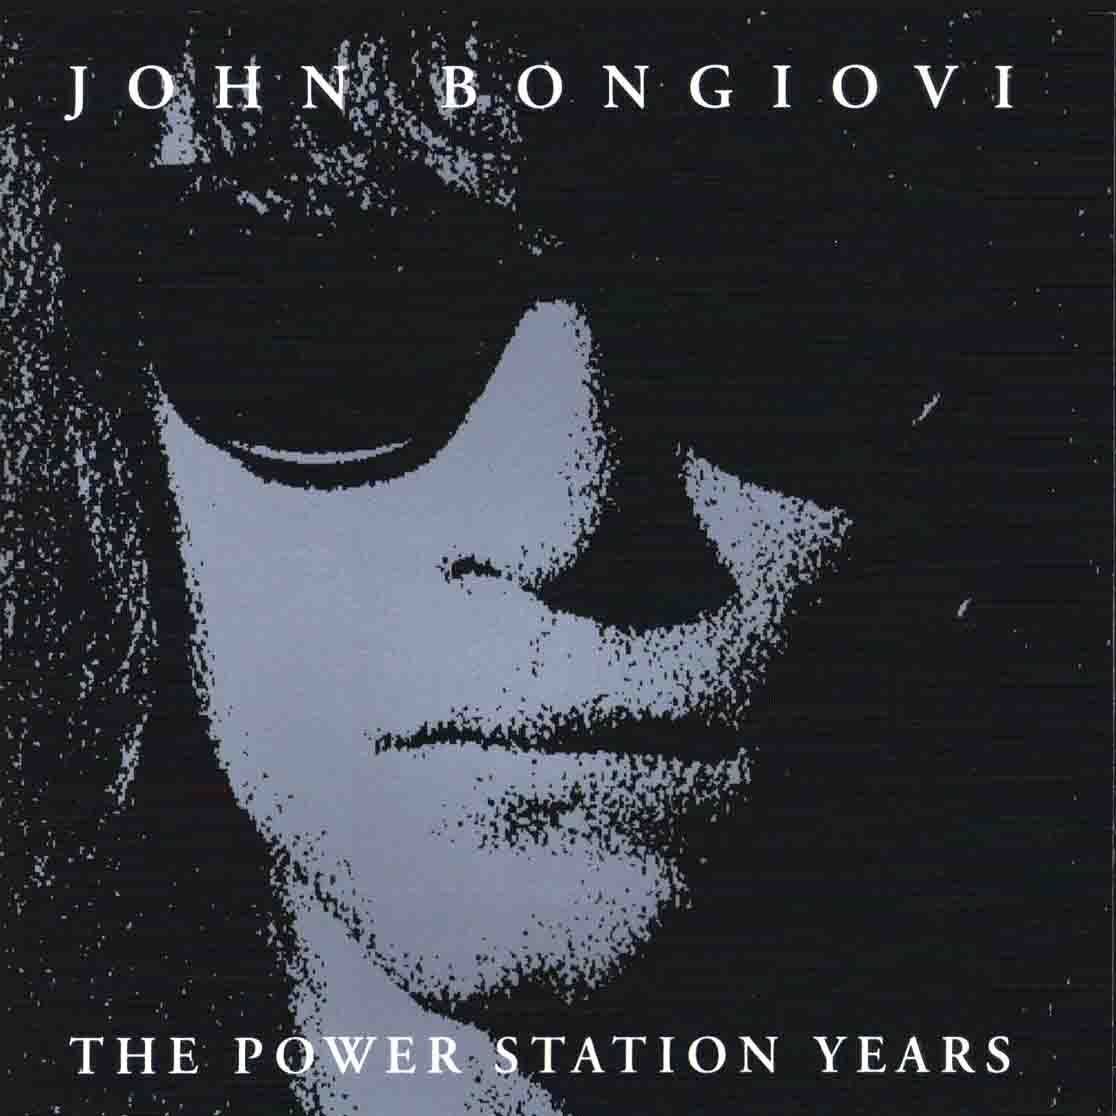 John Bongiovi - The Power Station Years (1997) FLAC Download